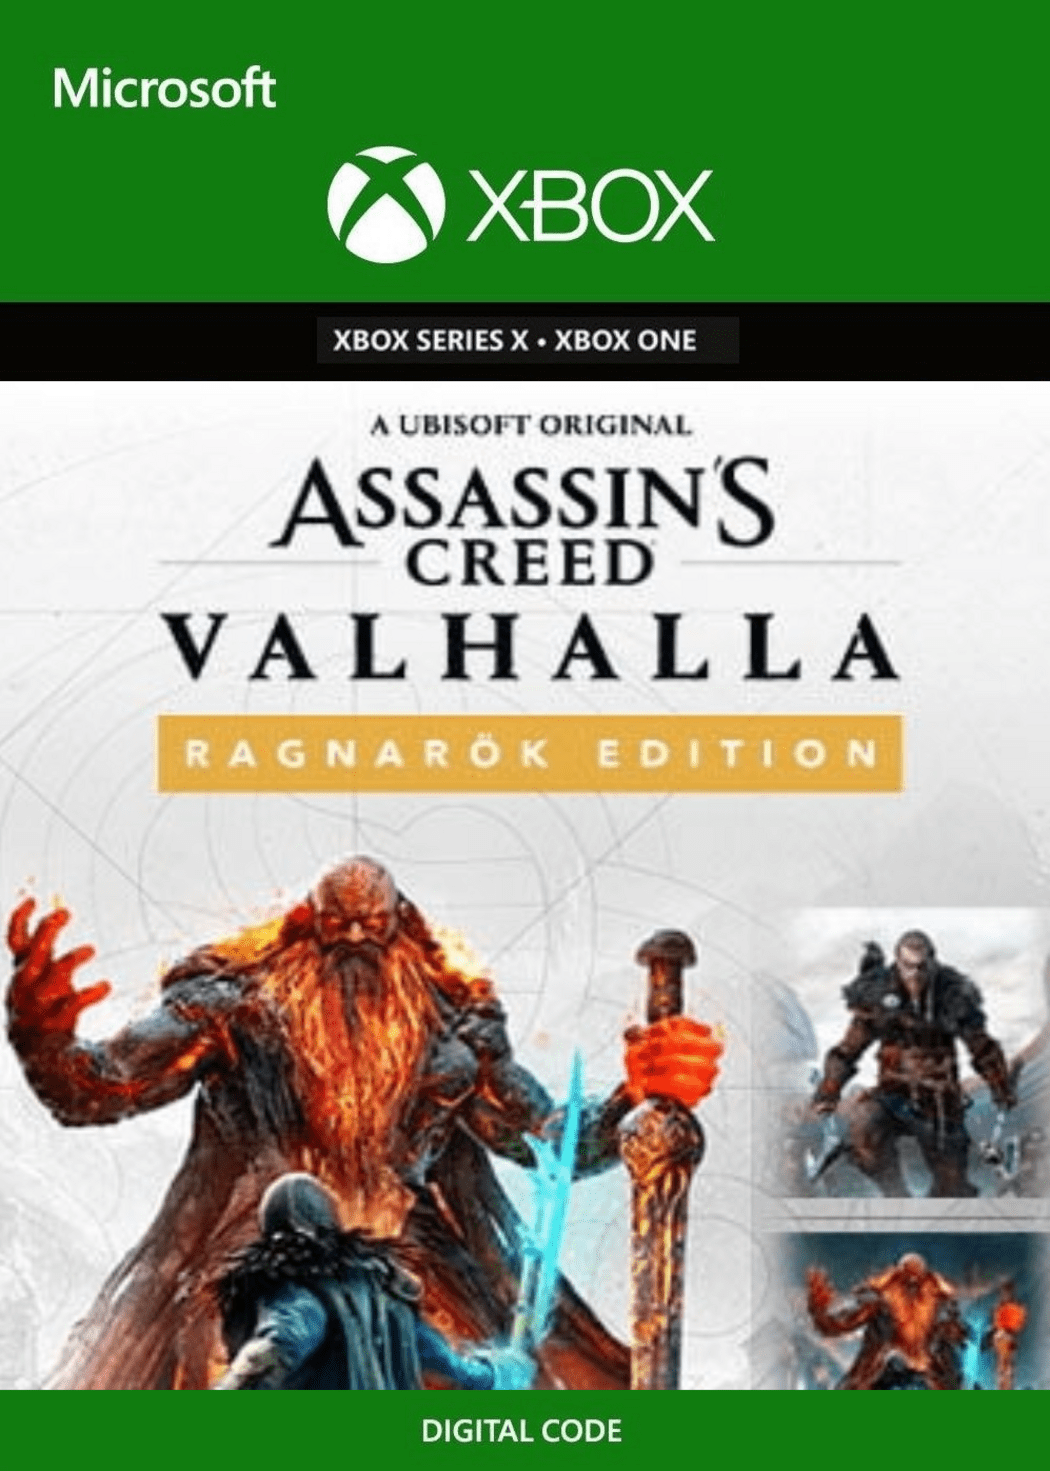 Assassin's Creed Valhalla se aprofunda na mitologia com Dawn of Ragnarok -  Xbox Wire em Português